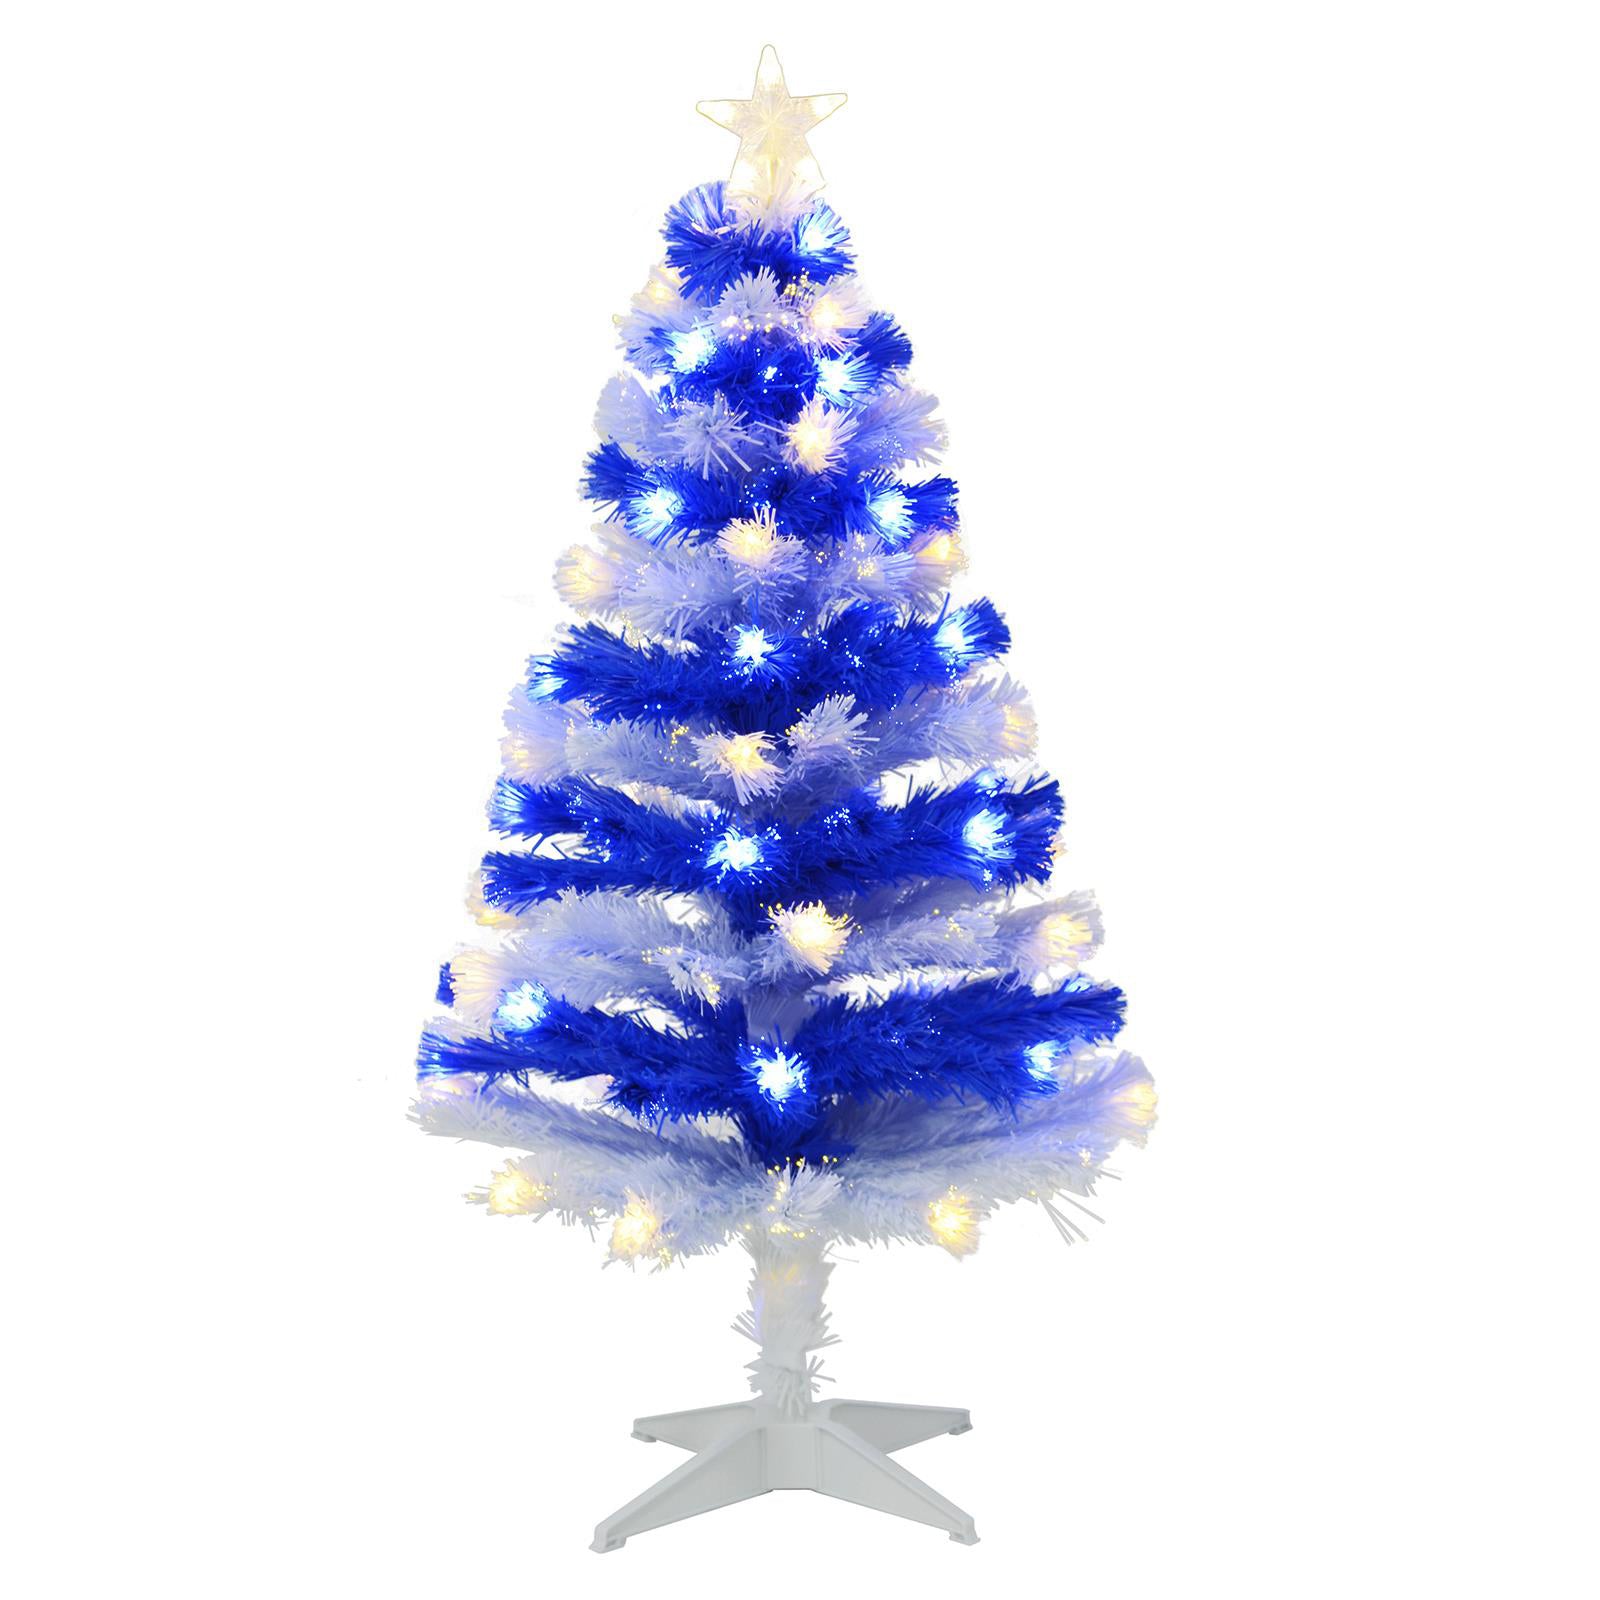 Mr Crimbo 4ft Fibre Optic Christmas Tree Stripe Red Blue - MrCrimbo.co.uk -XS6423 - Blue/White -4ft christmas tree